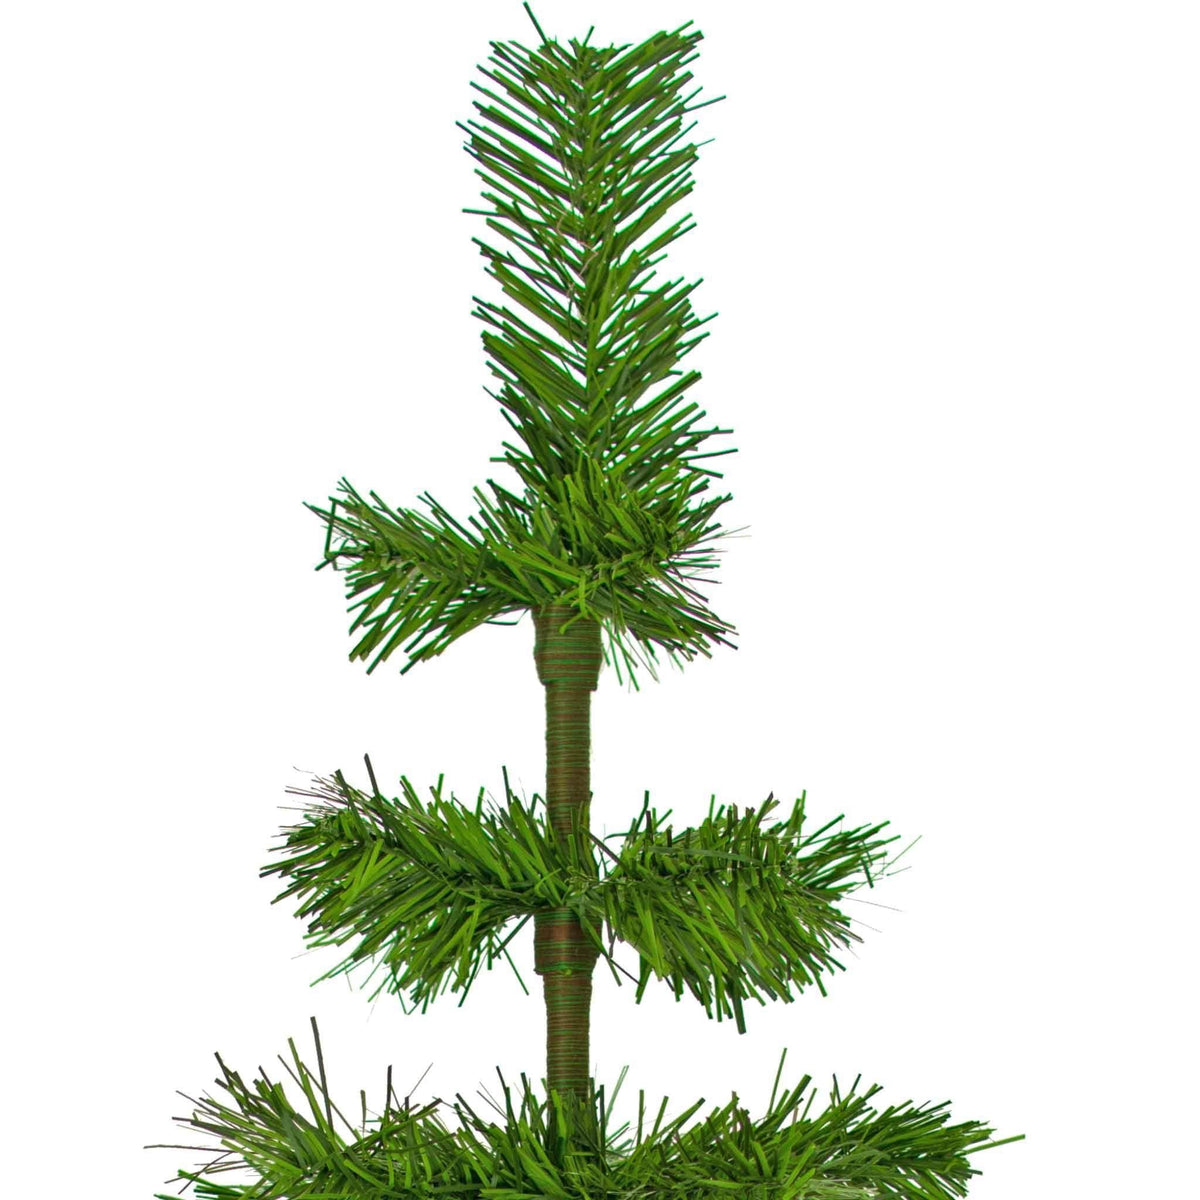 Top of Lee Display's 36in Alpine Green Tinsel Tree